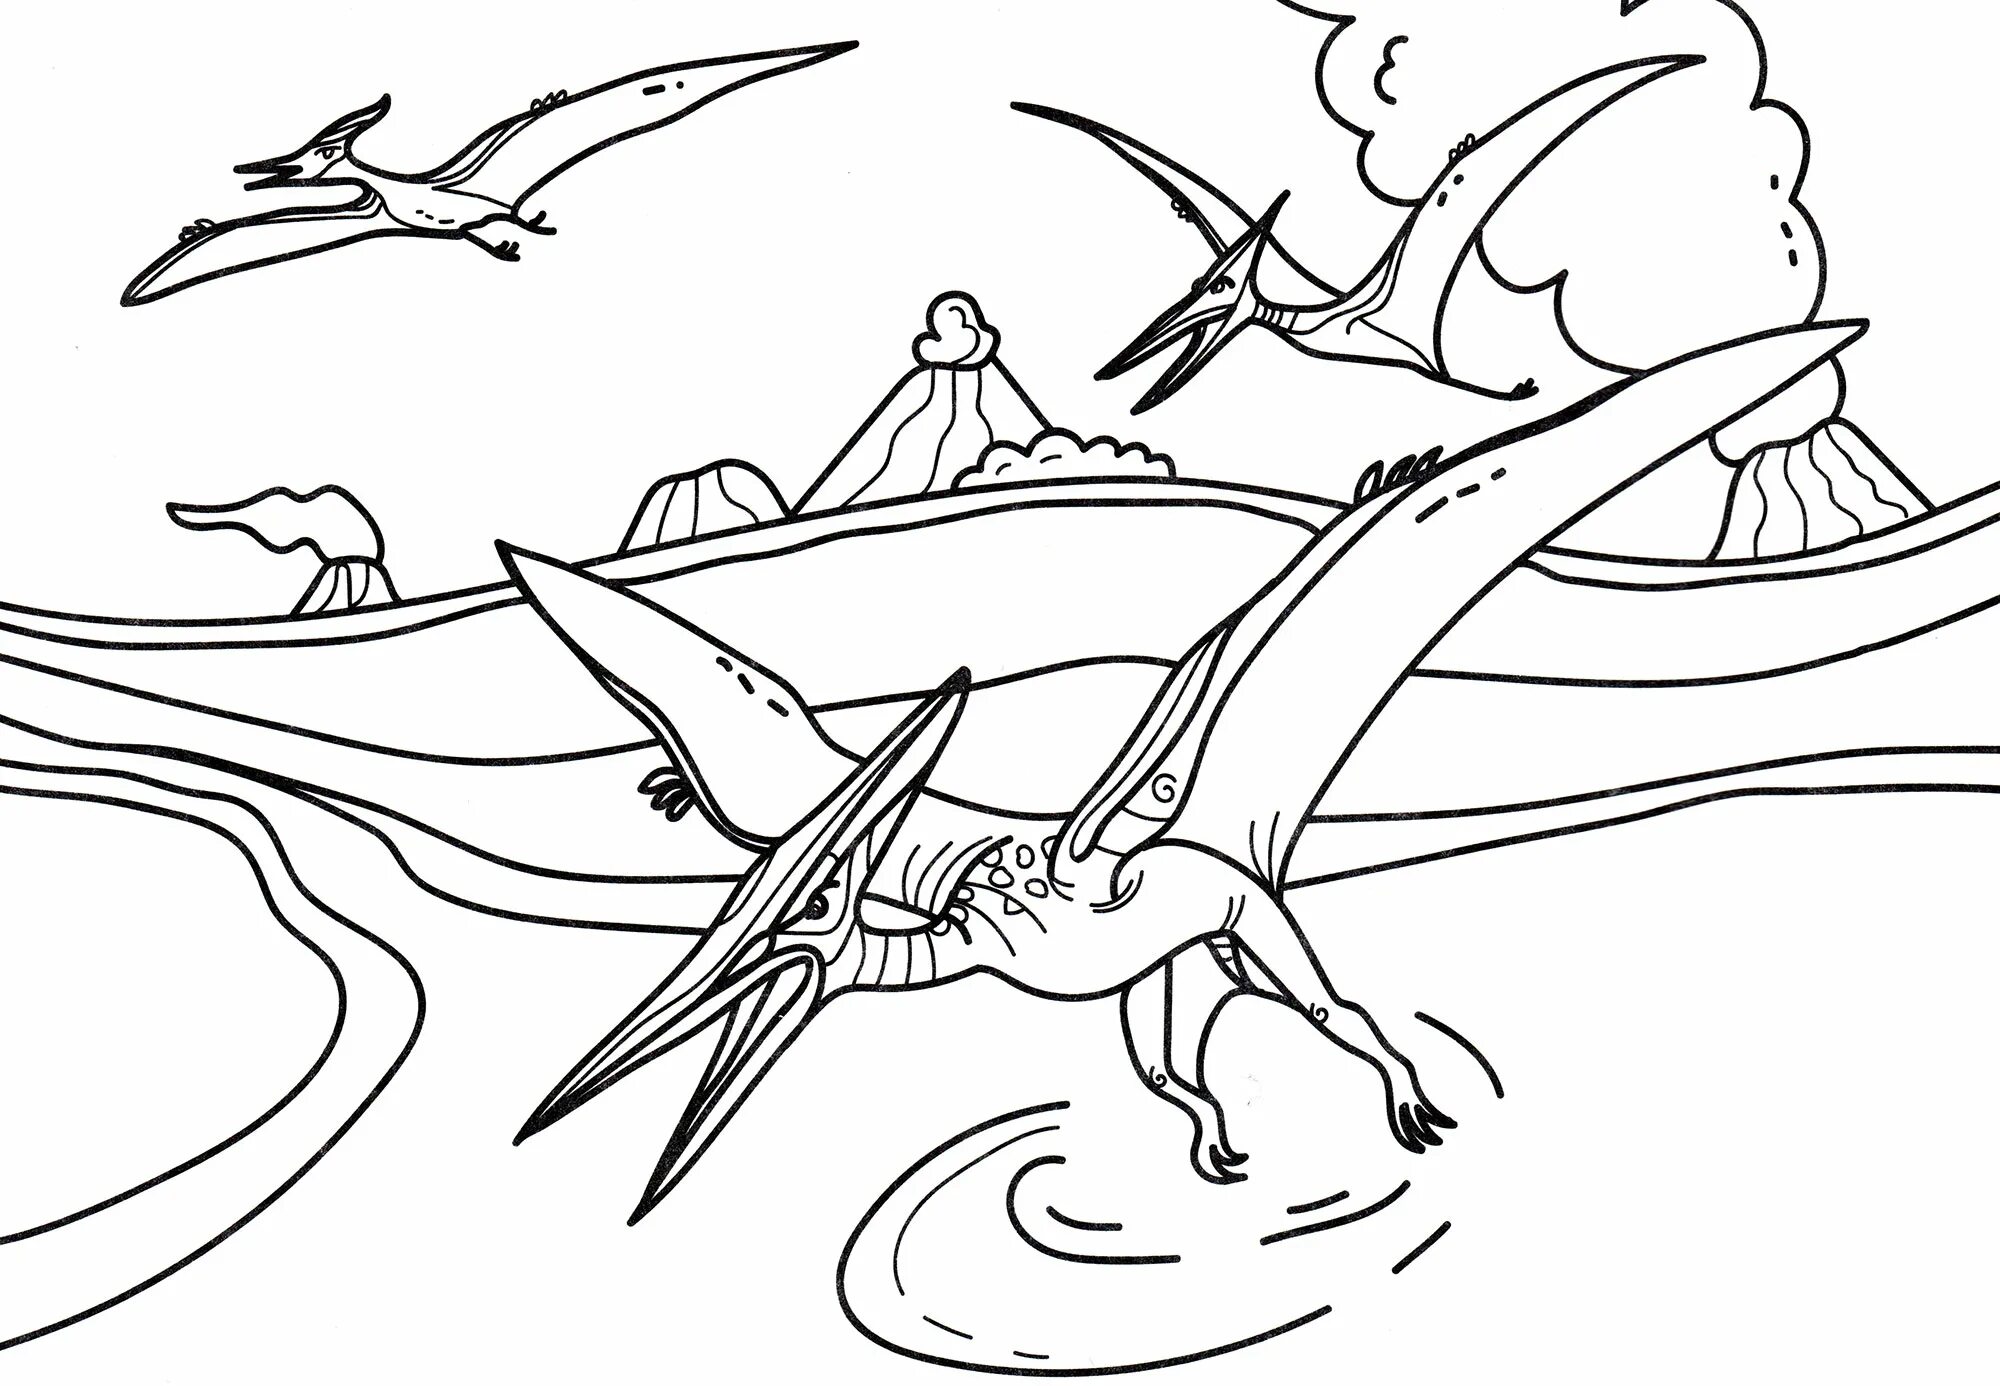 Pteranodon #1